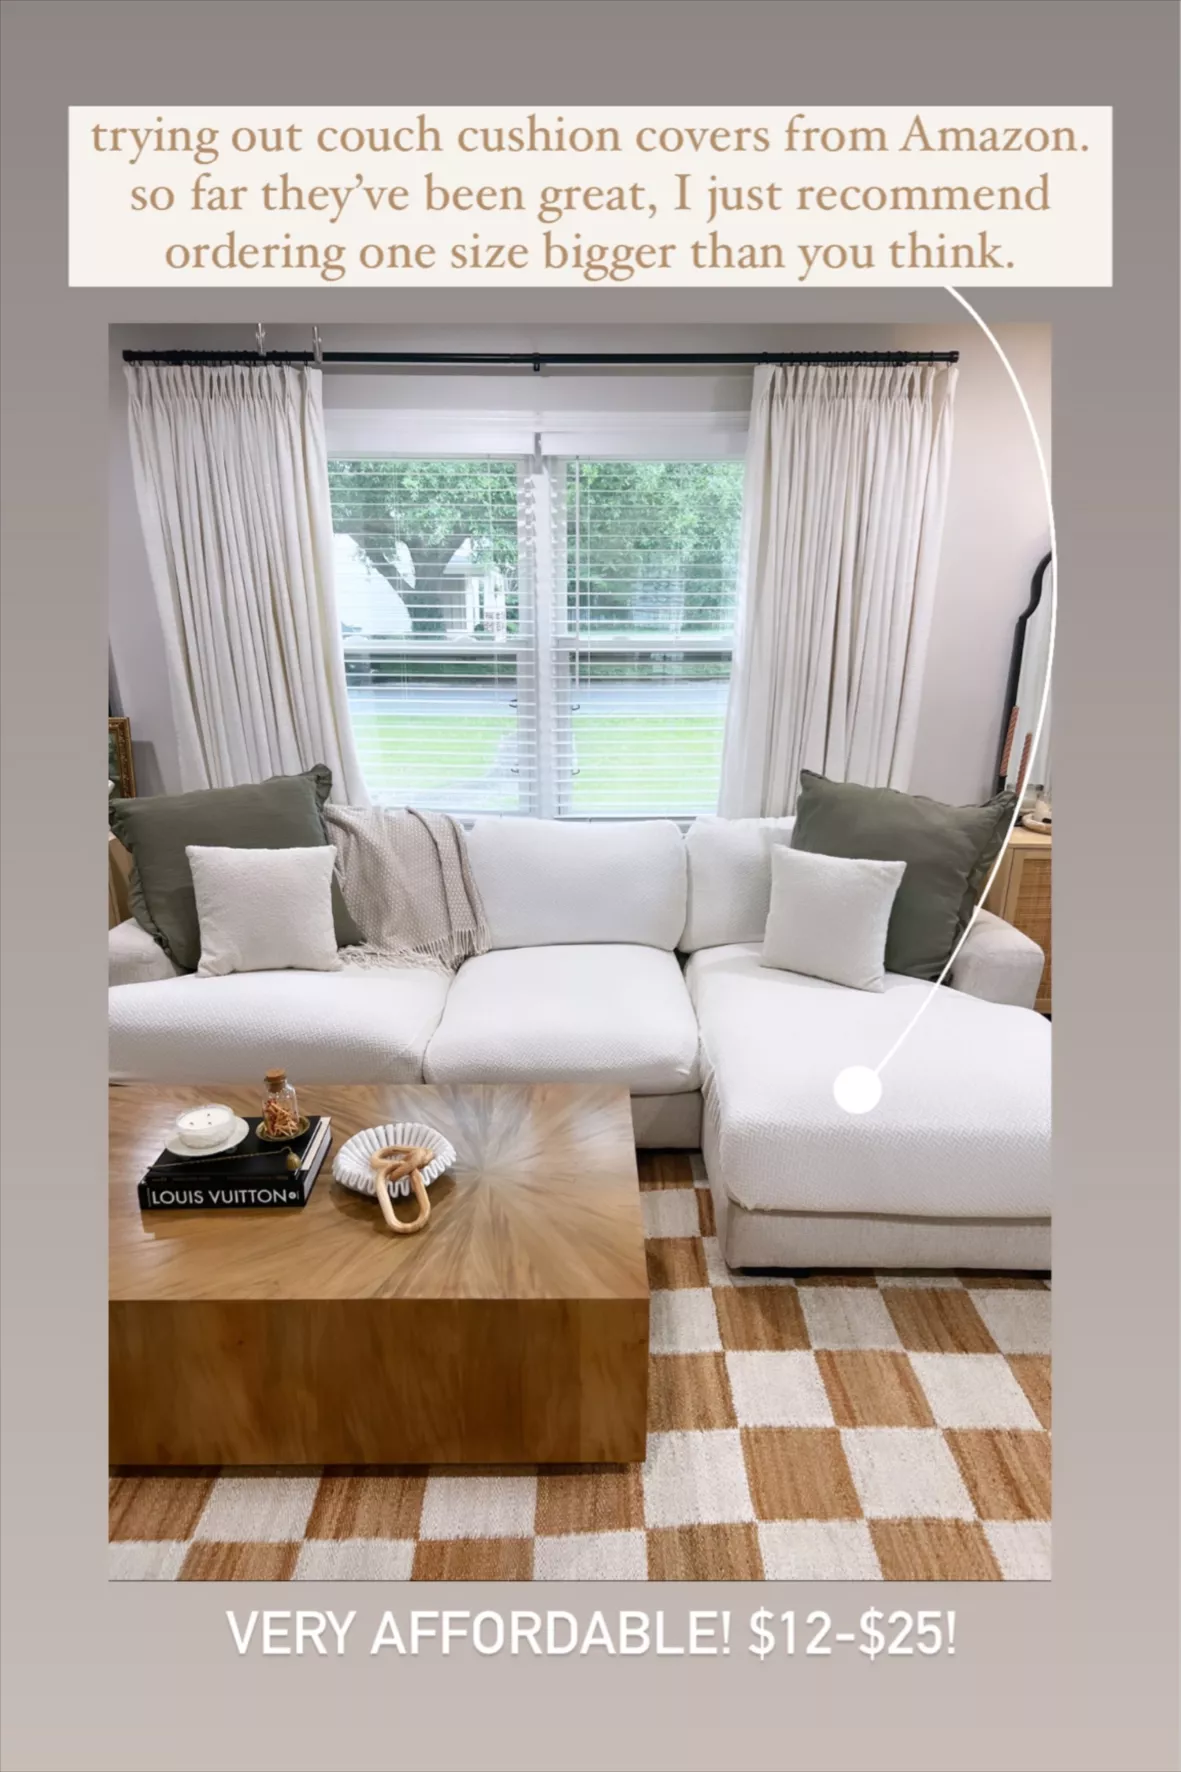 Disayu Magic Sofa Covers, Interior … curated on LTK